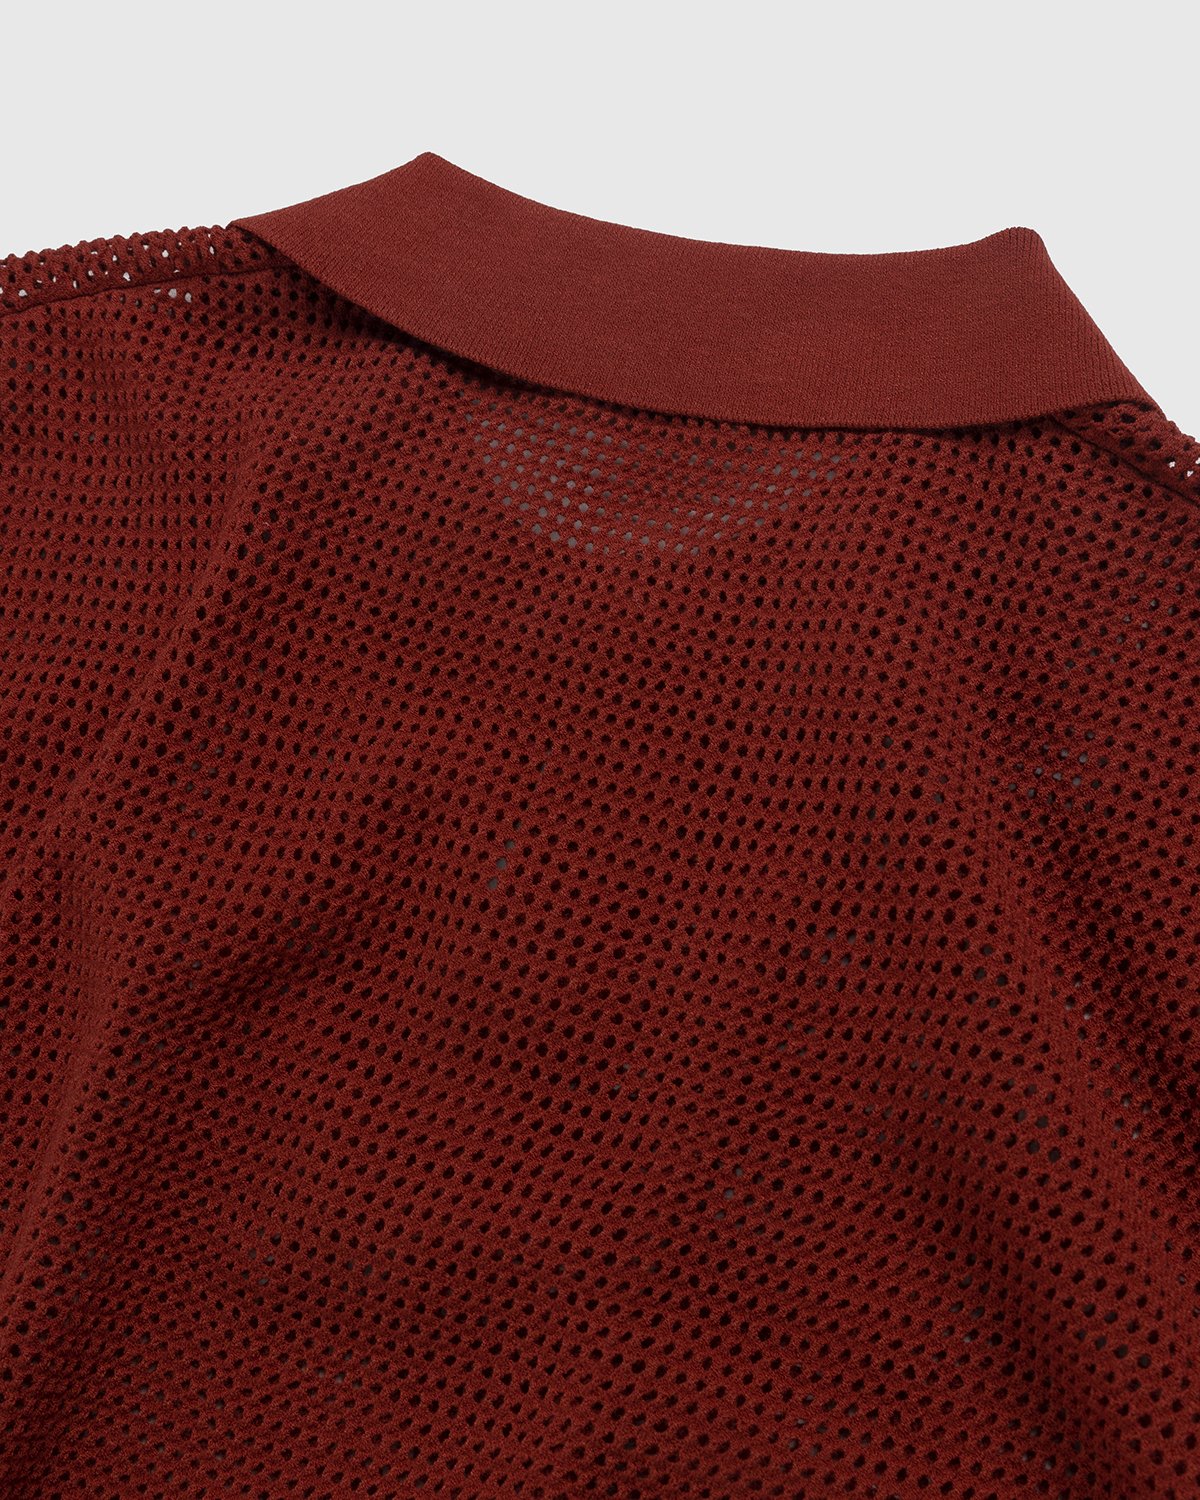 Dries van Noten - Jael Polo Shirt Brique - Clothing - Red - Image 4